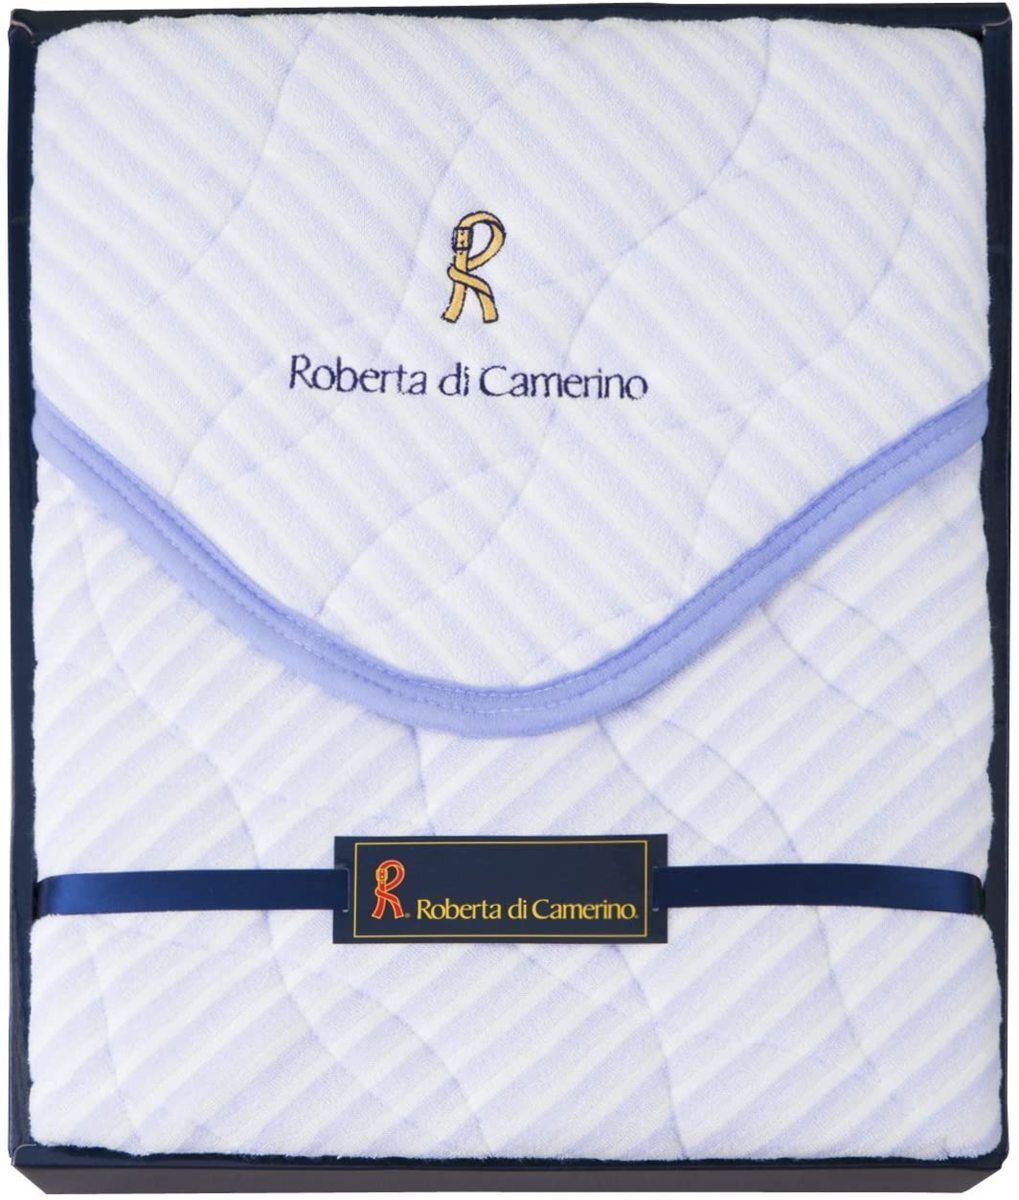 [ regular price 5000 jpy ×2 pieces set ] Roberta high quality mattress pad Comfi -ne single gift box 